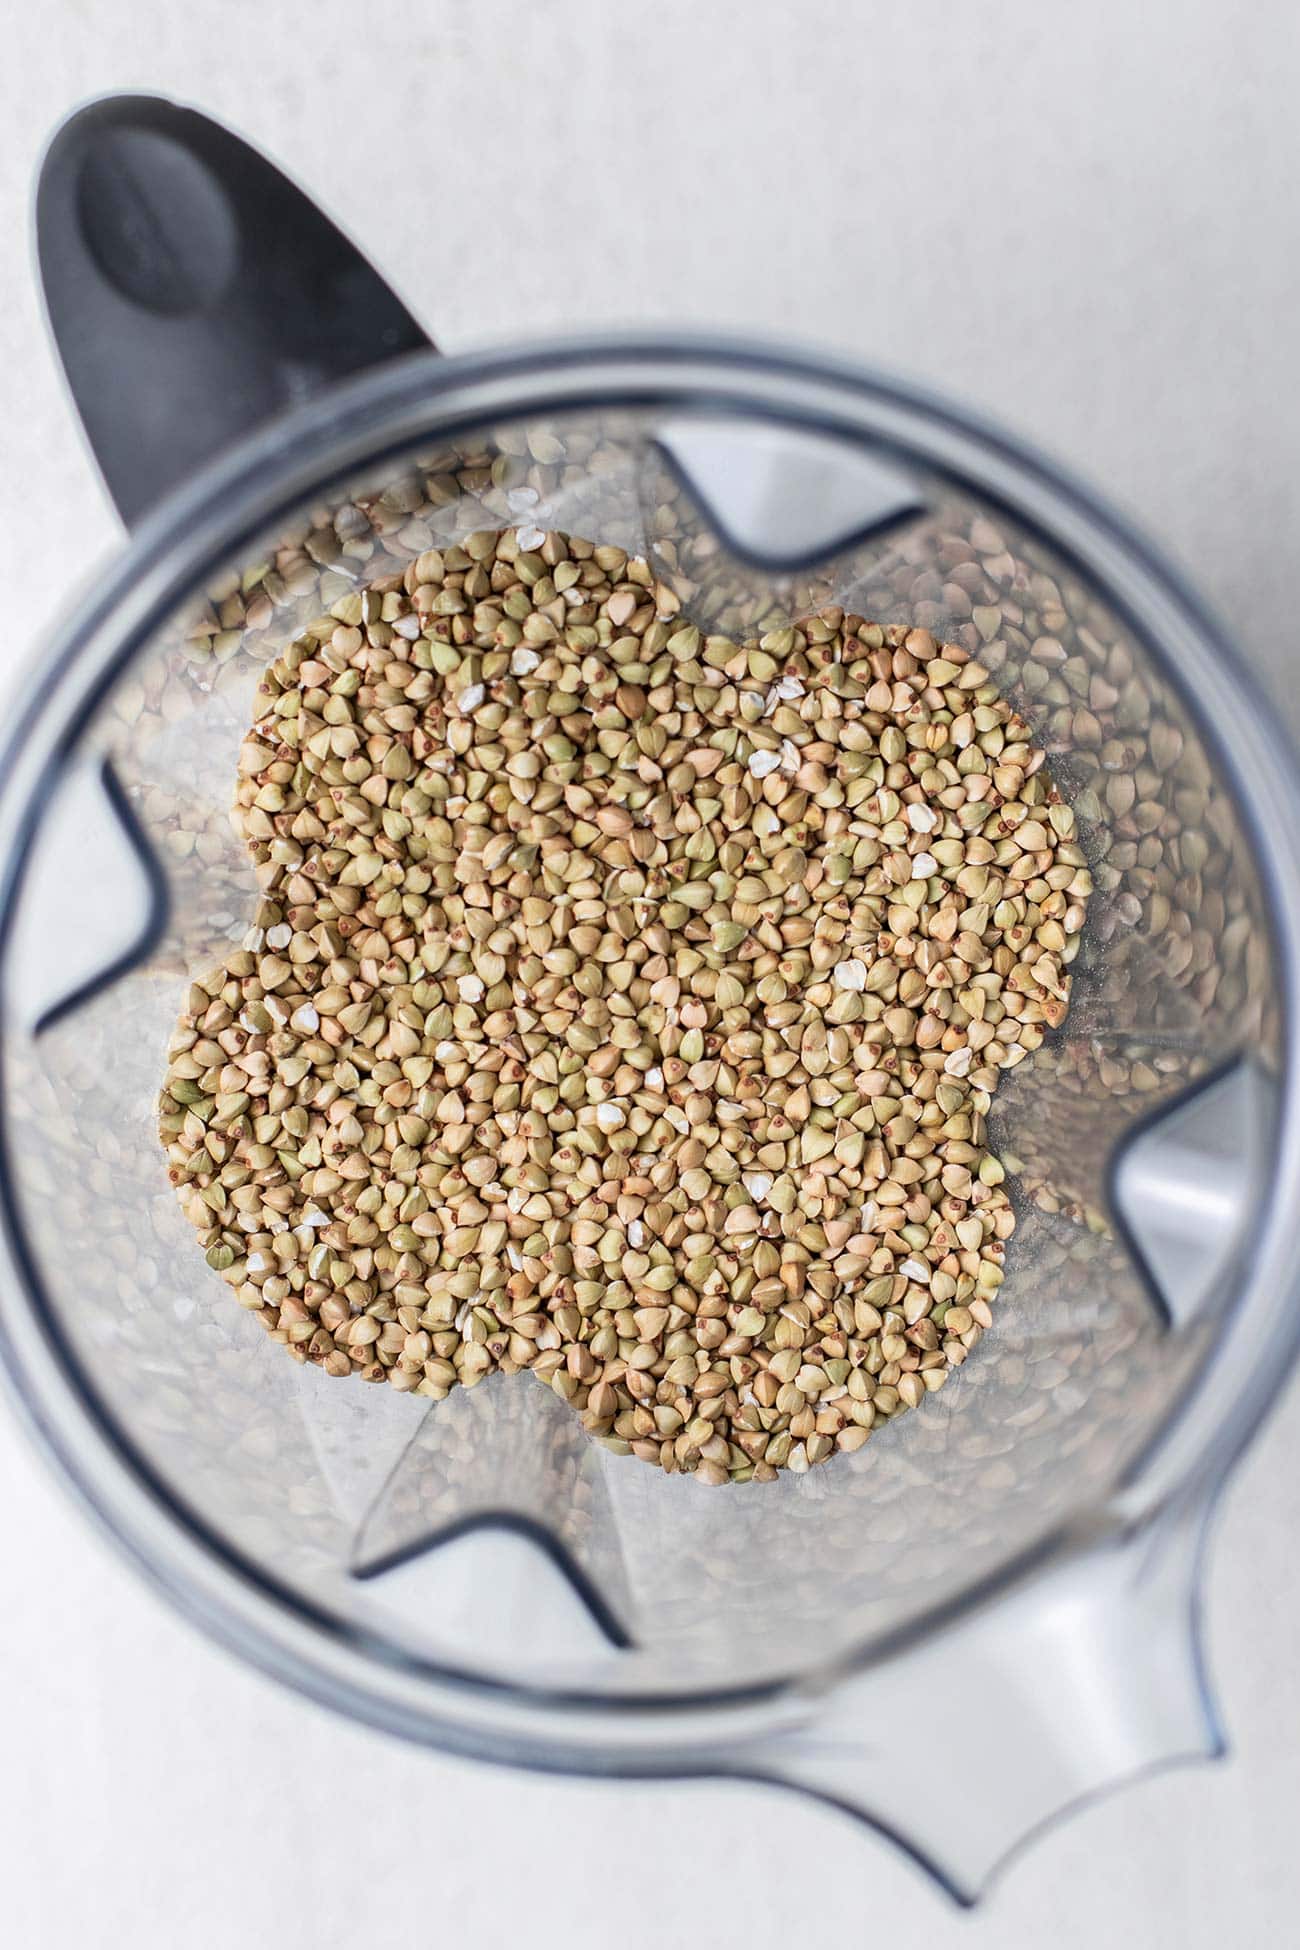 Raw buckwheat groats in a blender.